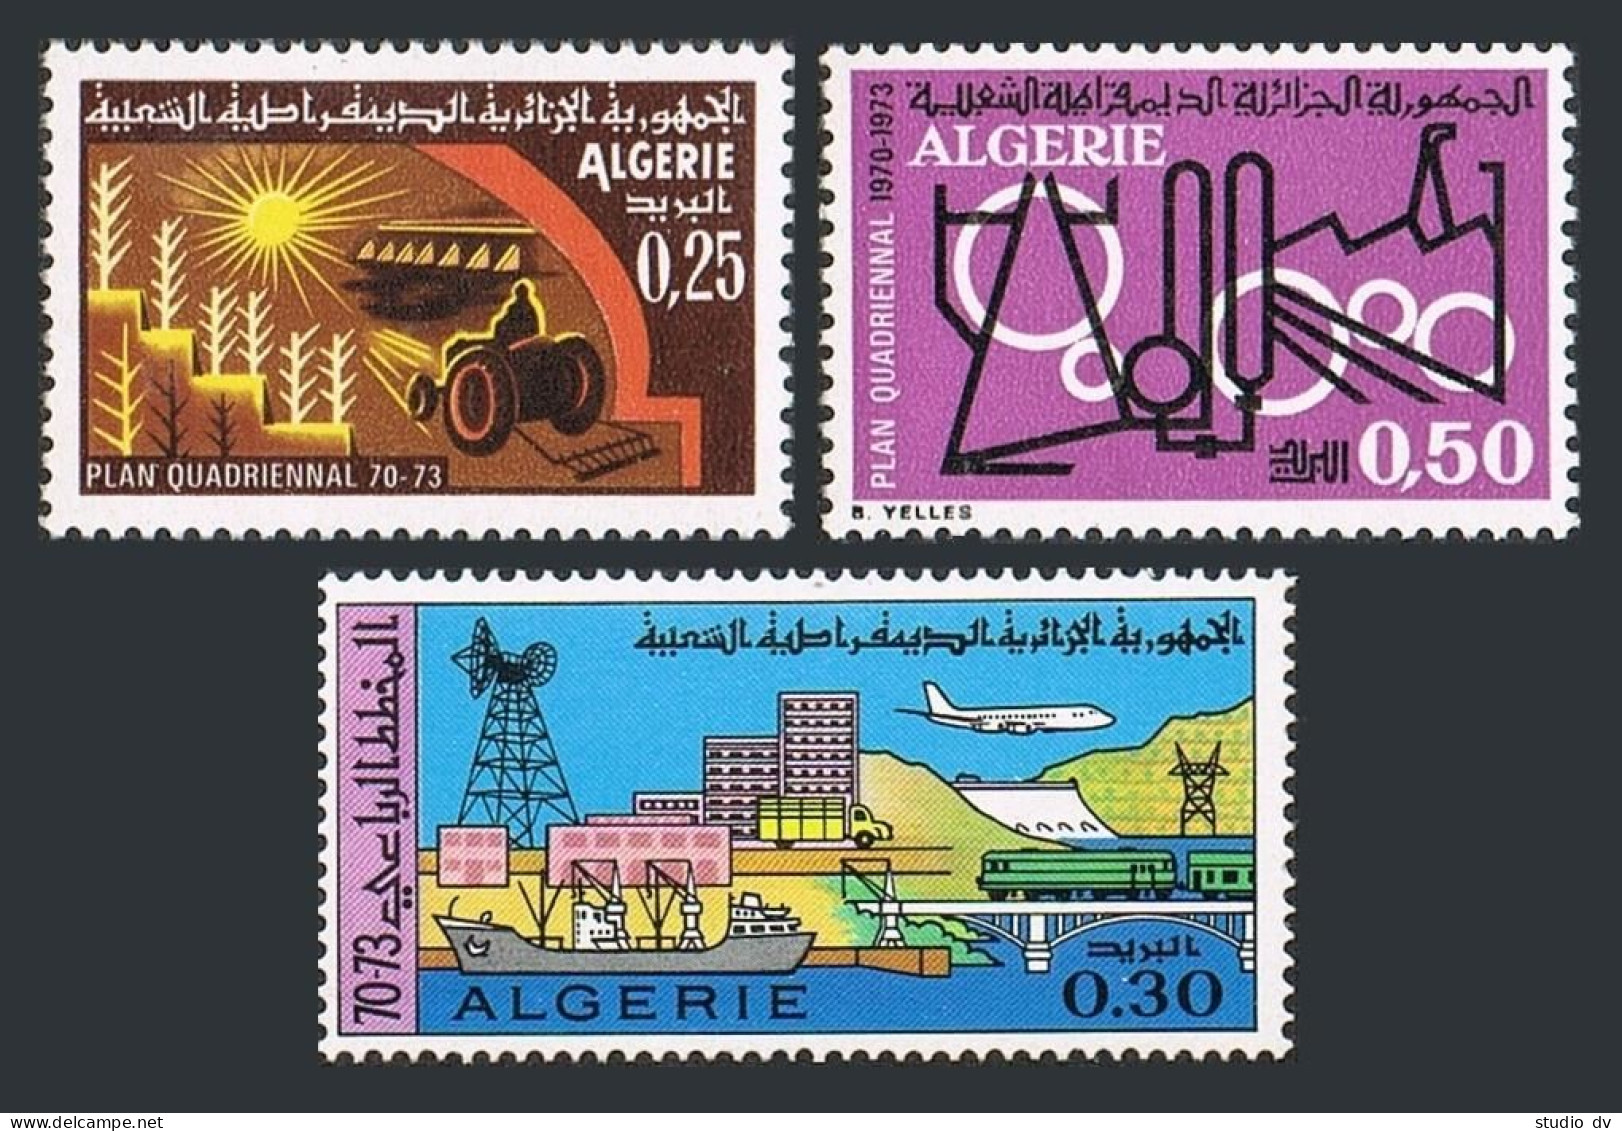 Algeria 431-433,MNH.Michel 540-442. Four-year Development Plan,1970. - Algerien (1962-...)